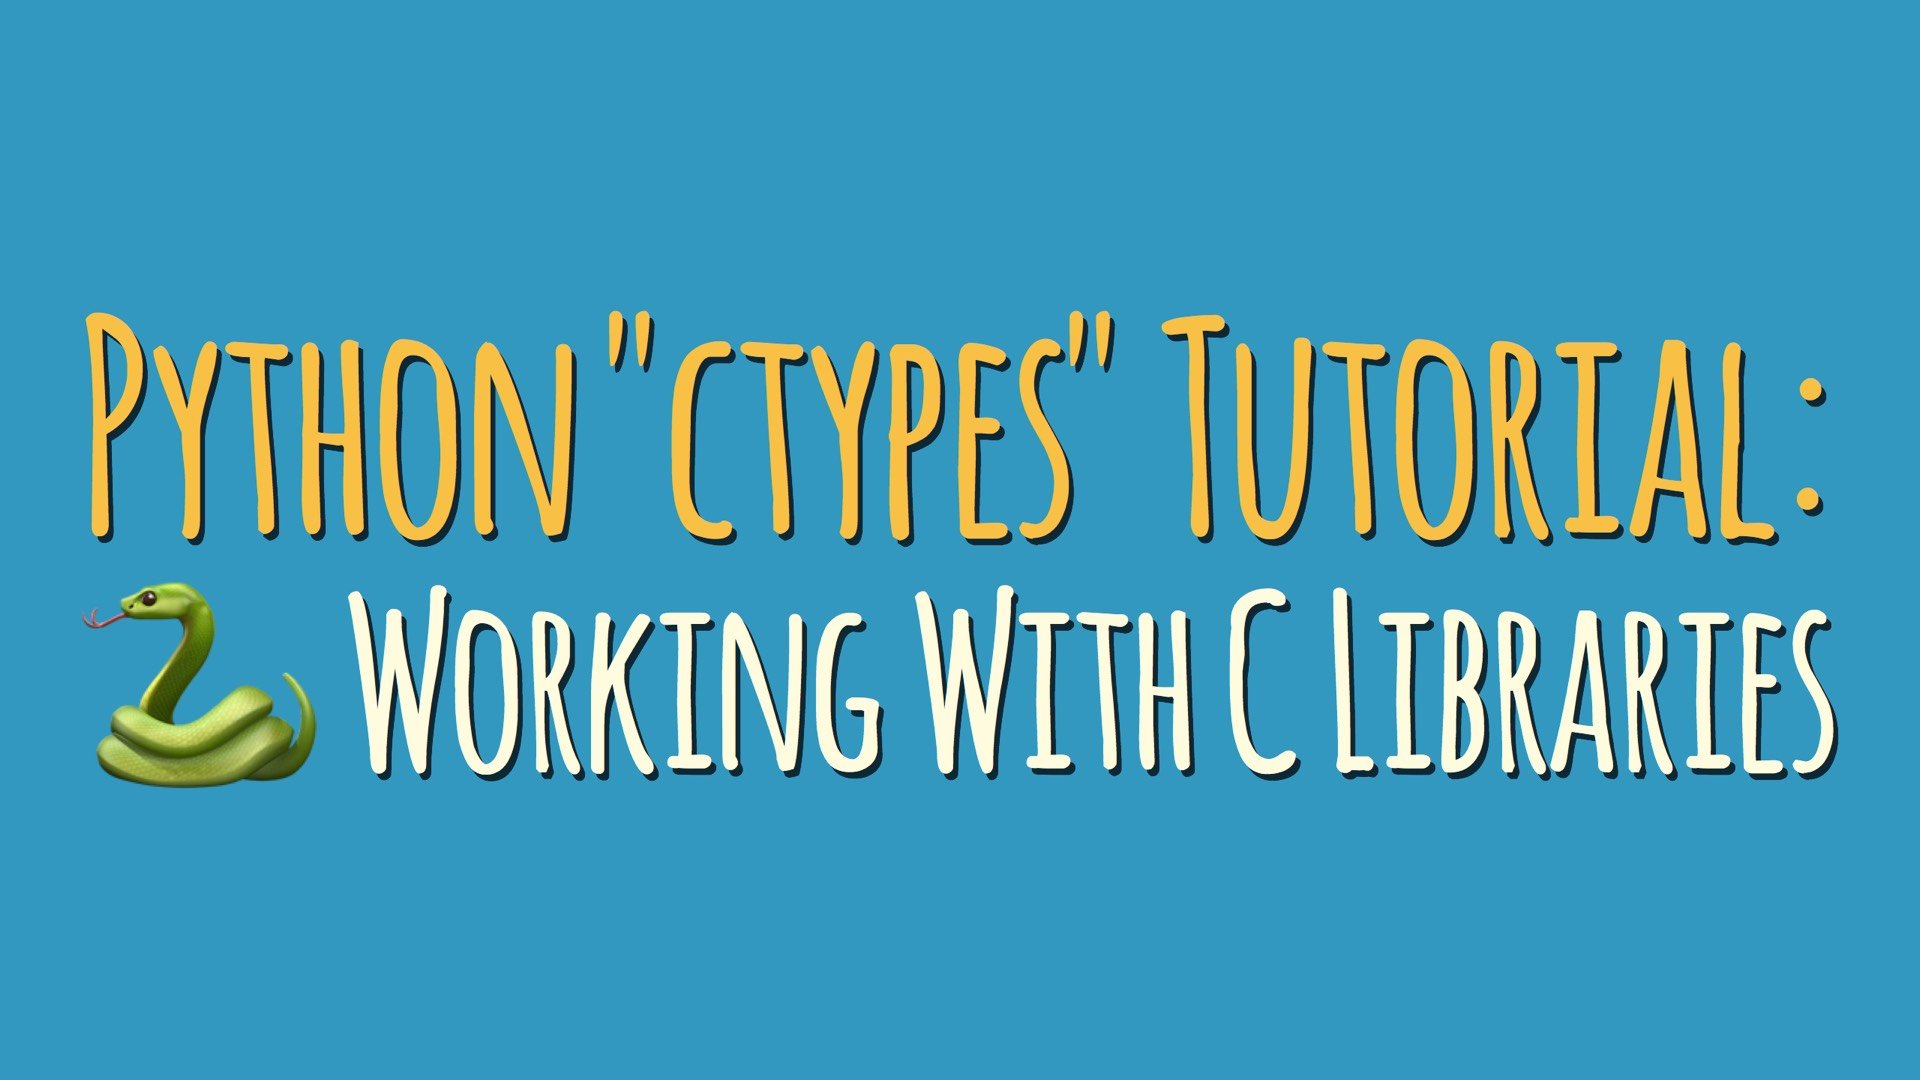 Python ctypes Tutorial